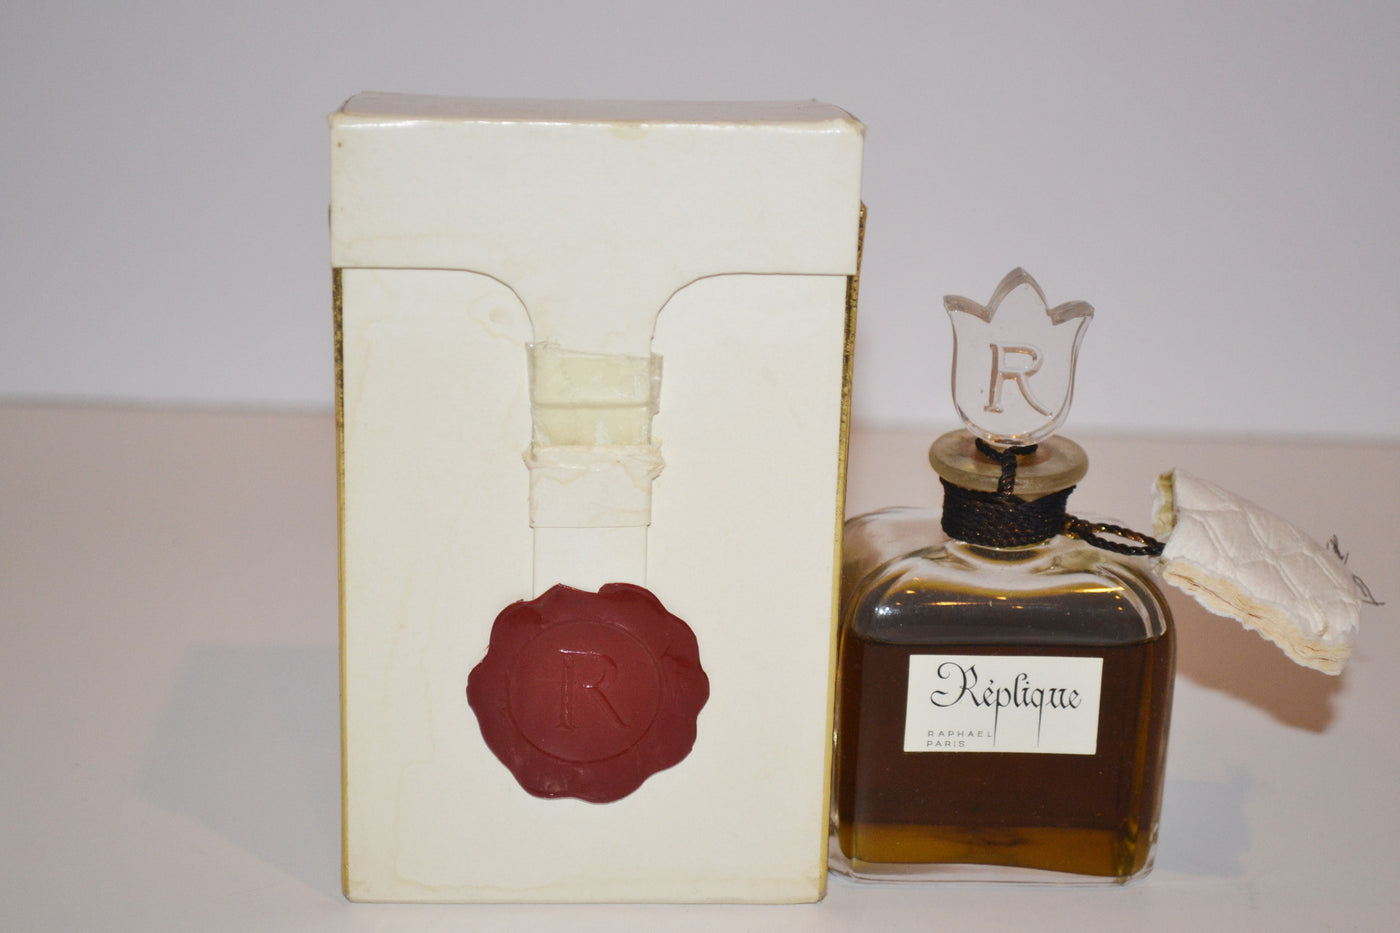 Vintage Replique Perfume By Raphael 